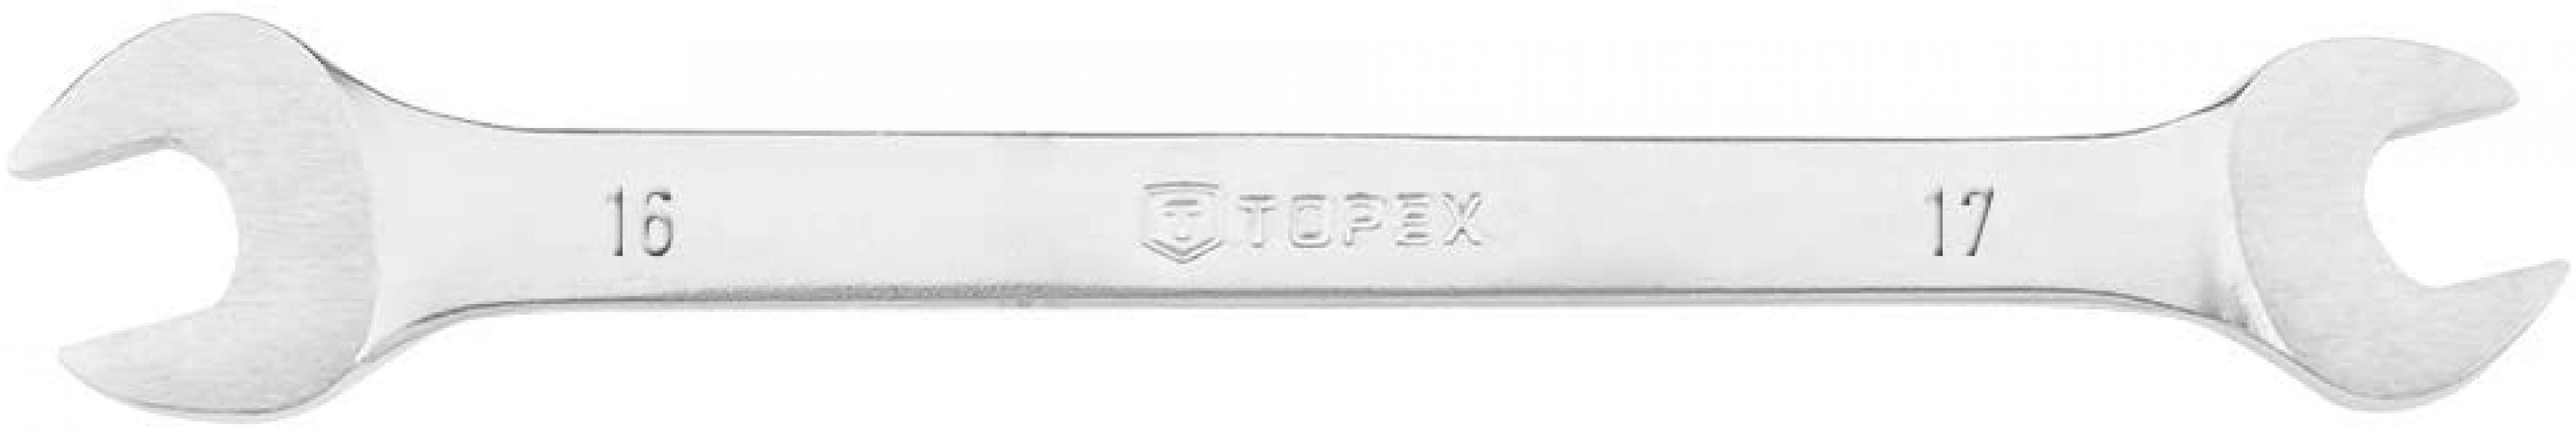 Chiave inglese a doppia apertura TOPEX misure 16 - 17 mm